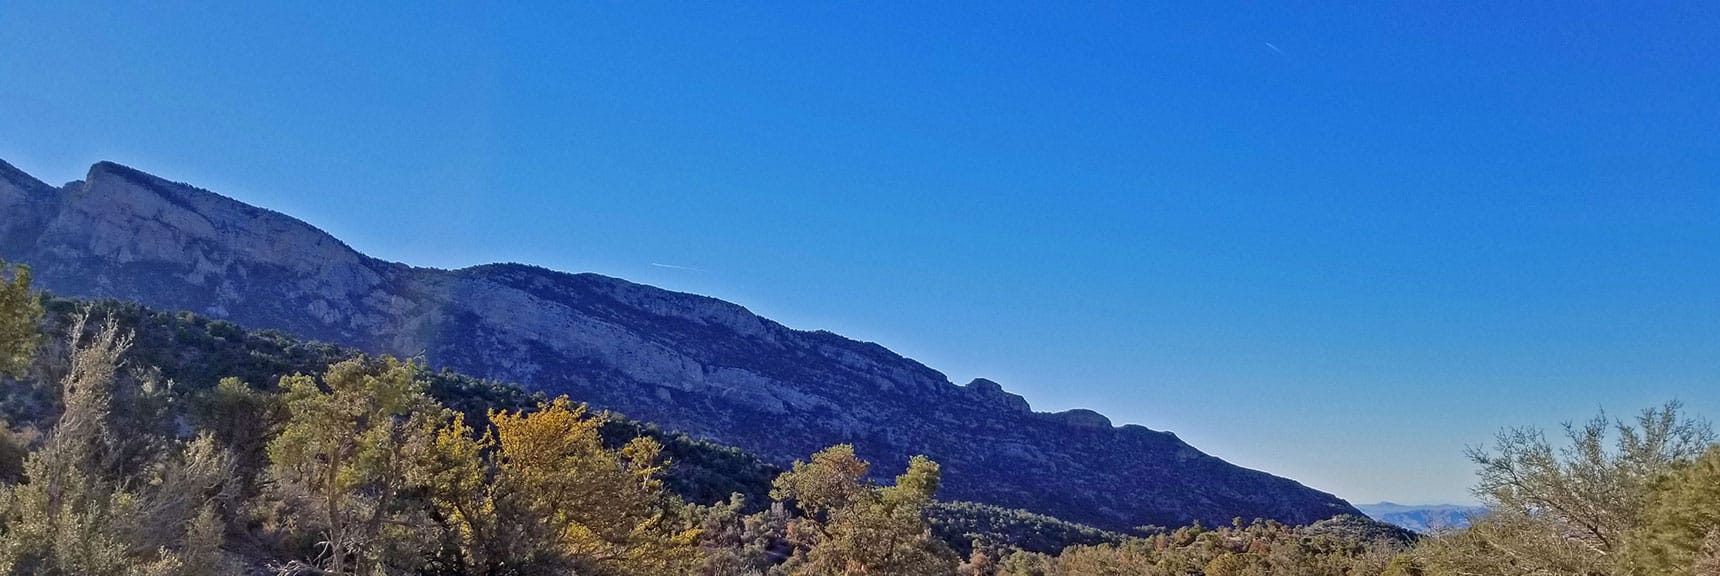 View Toward the Western Cliffs from Potosi Canyon Pass High Point | Potosi Mt. Summit via Western Cliffs Ridgeline, Spring Mountains, Nevada